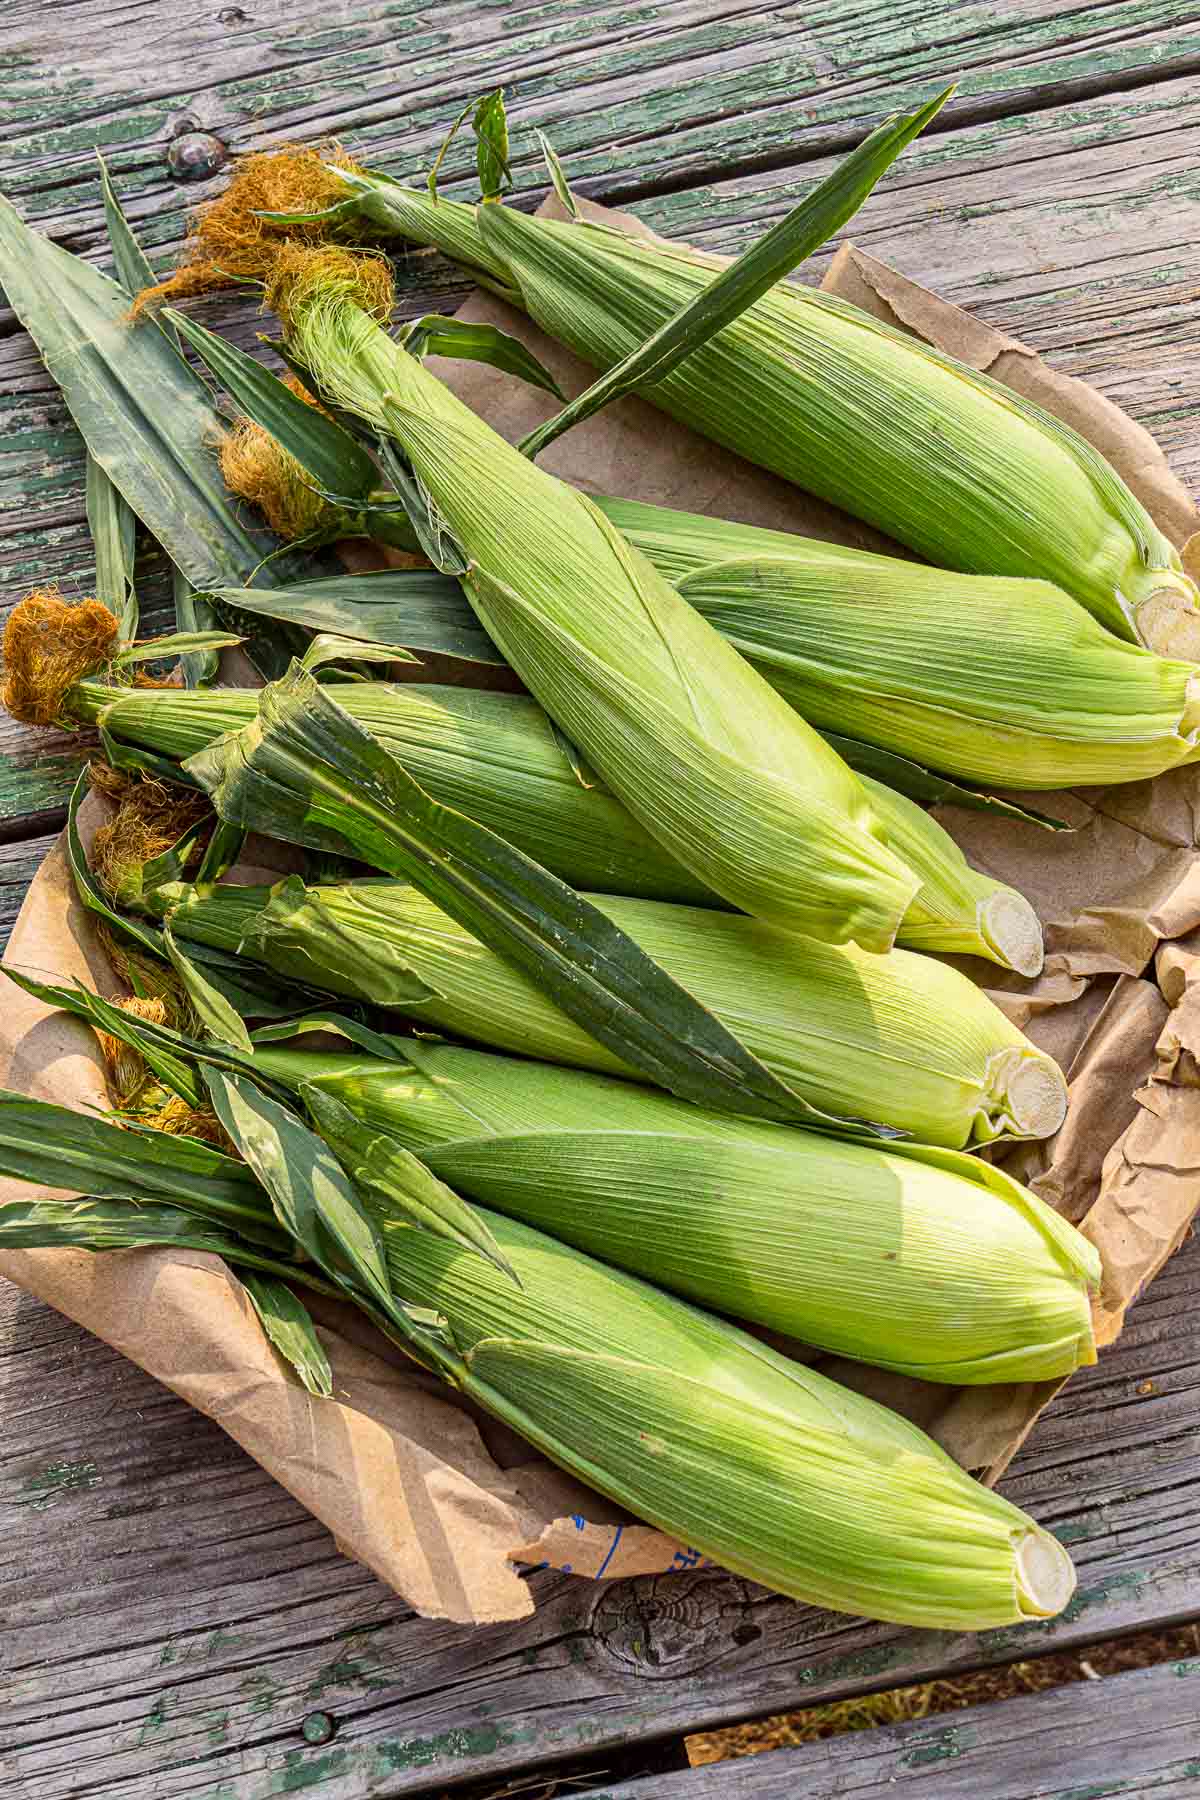 Corn cobs on a table